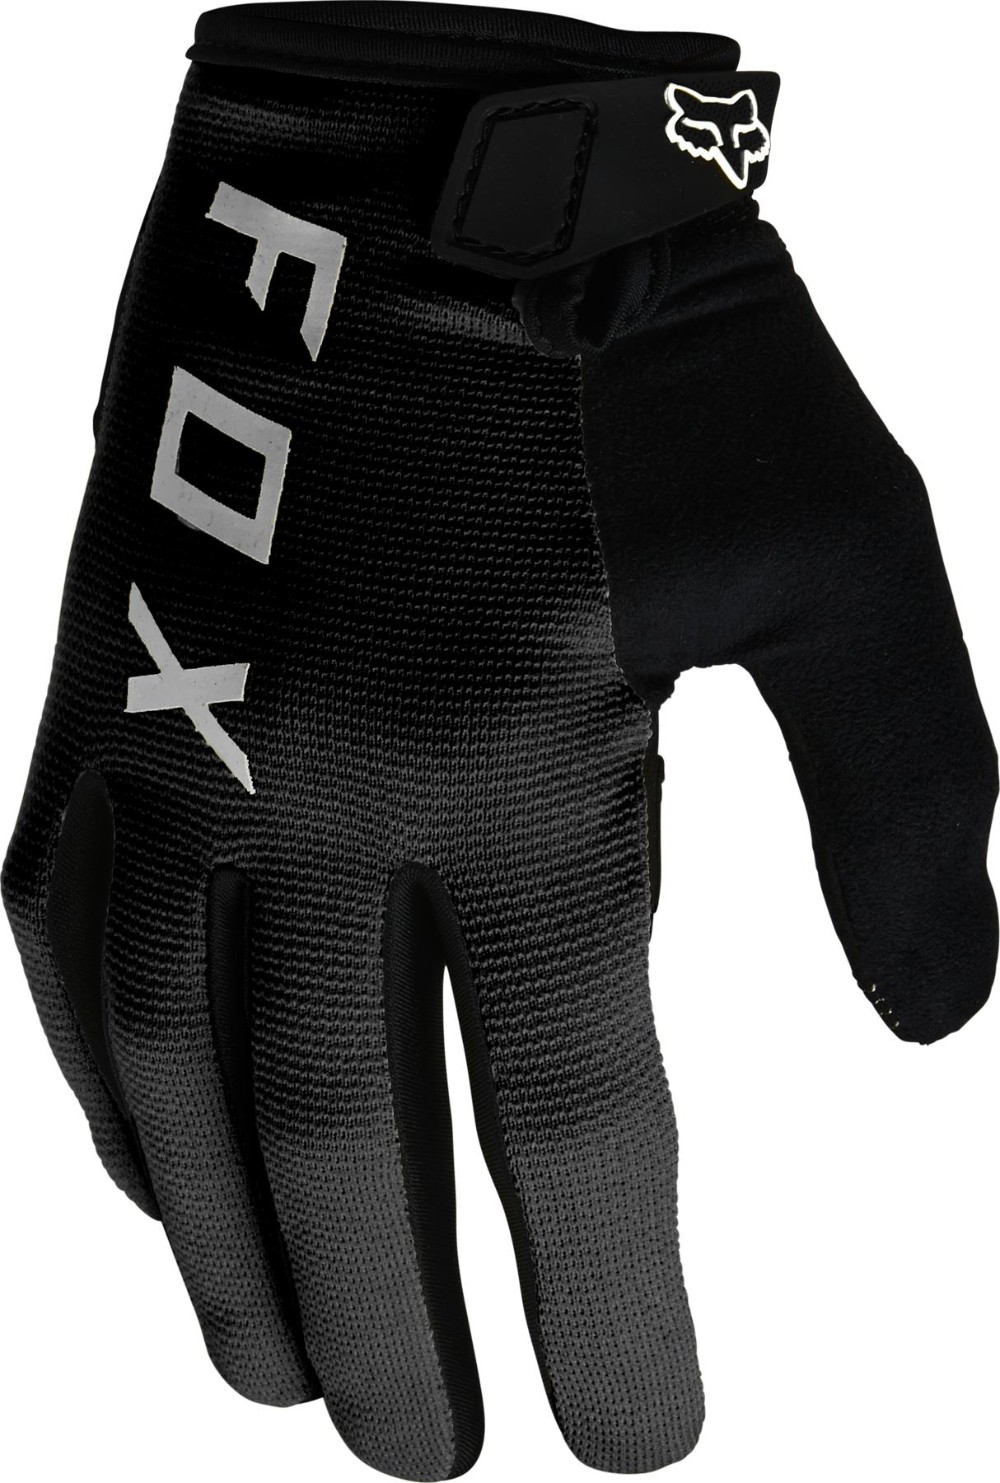 Ranger Gel Womens Long Finger MTB Cycling Gloves image 0